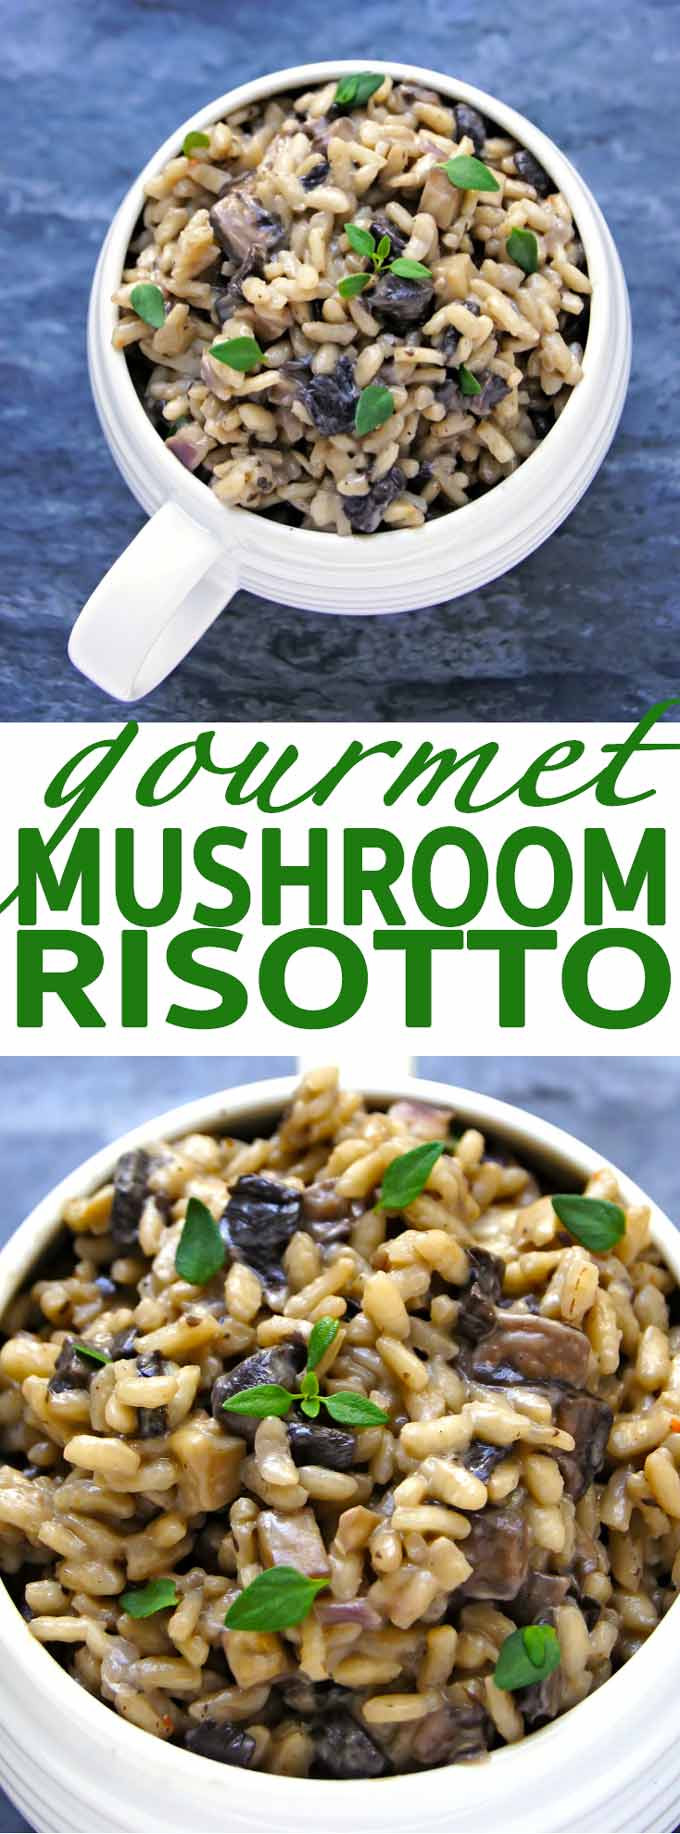 Gourmet Mushroom Risotto
 ITALIAN STYLE GOURMET MUSHROOM RISOTTO